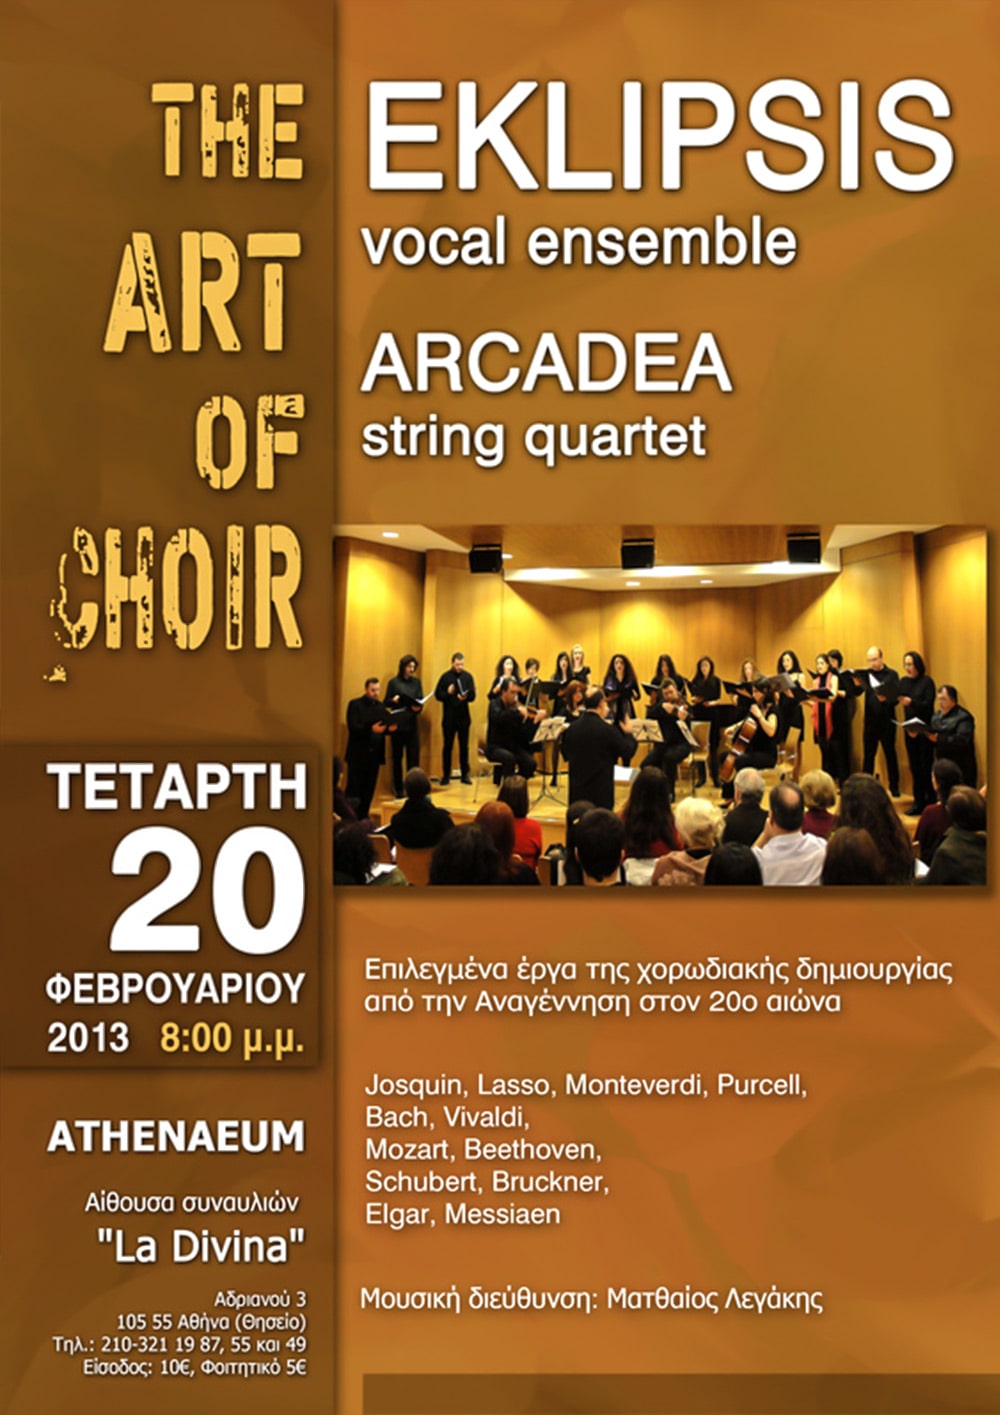 Eklipsis vocal ensemble | The Art of Choir